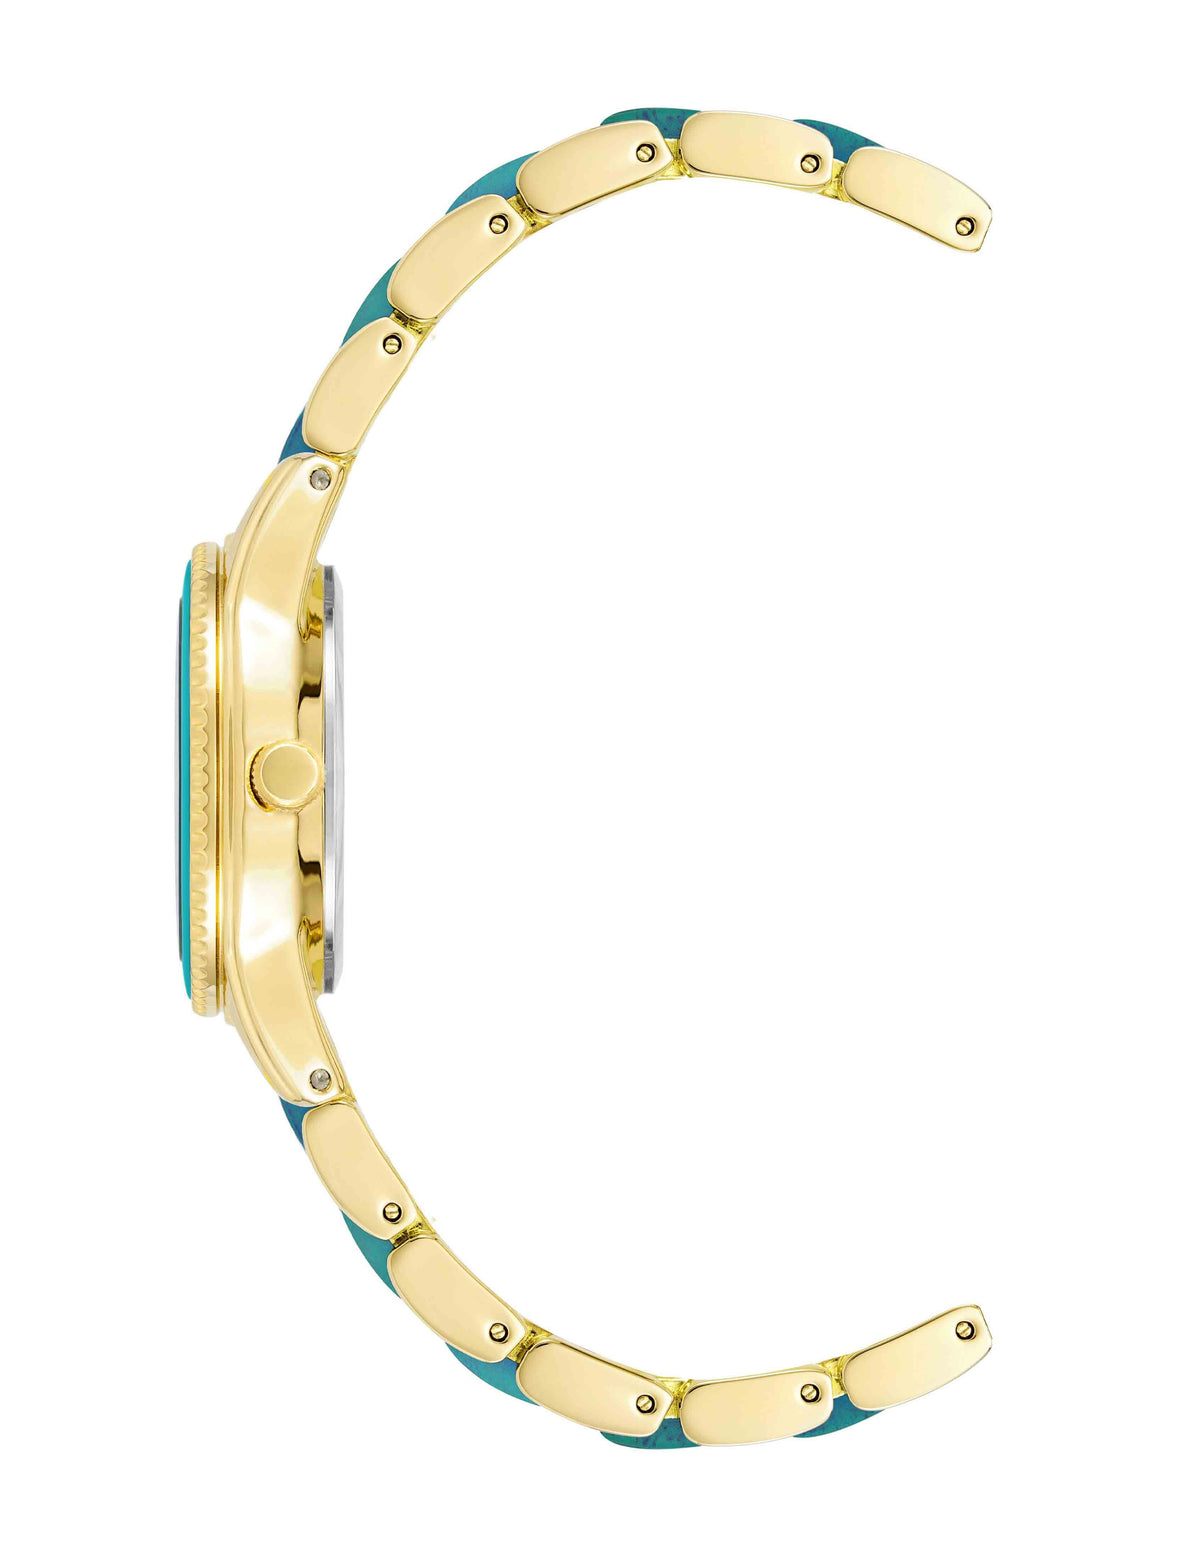 Anne Klein  Pearlescent Resin Link Bracelet Watch - Clearance